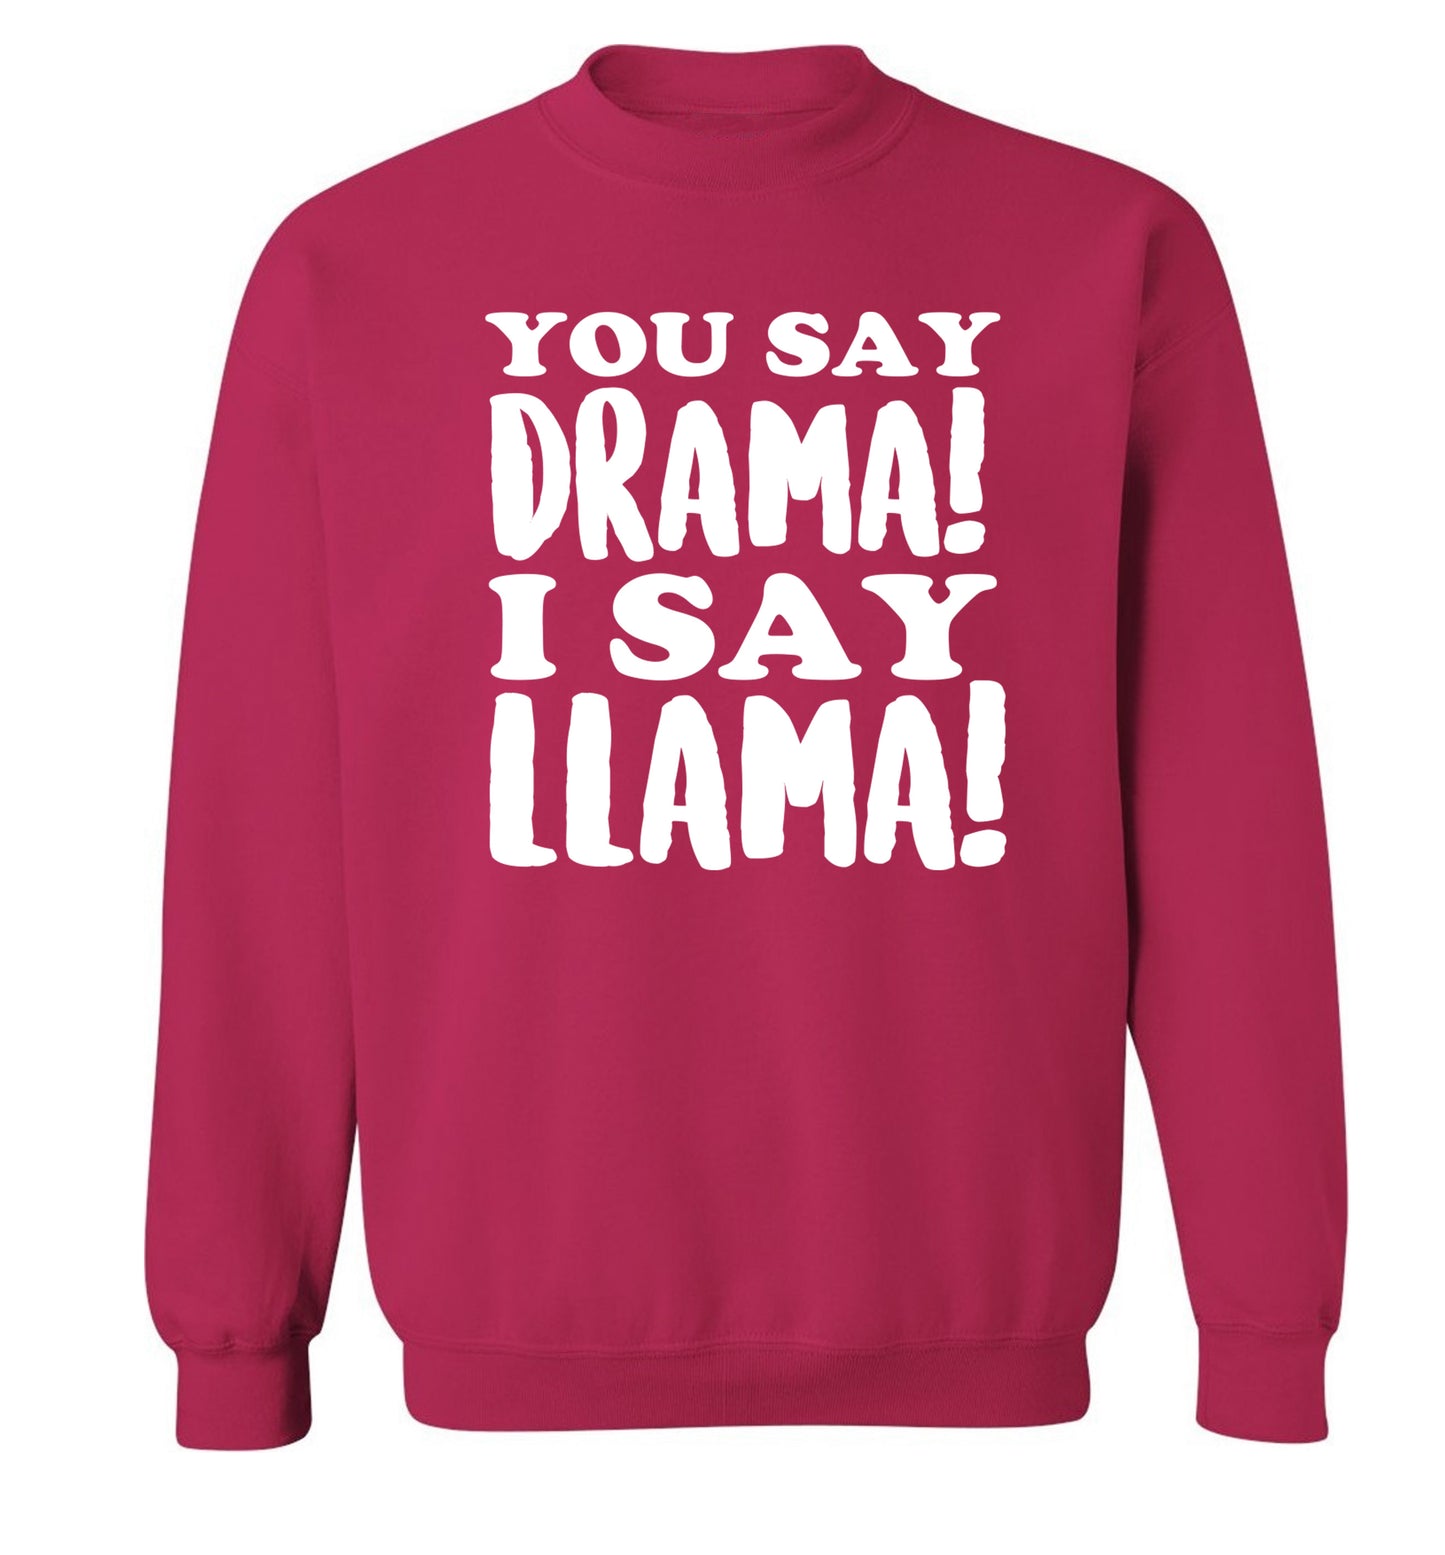 You say drama I say llama! Adult's unisex pink Sweater 2XL